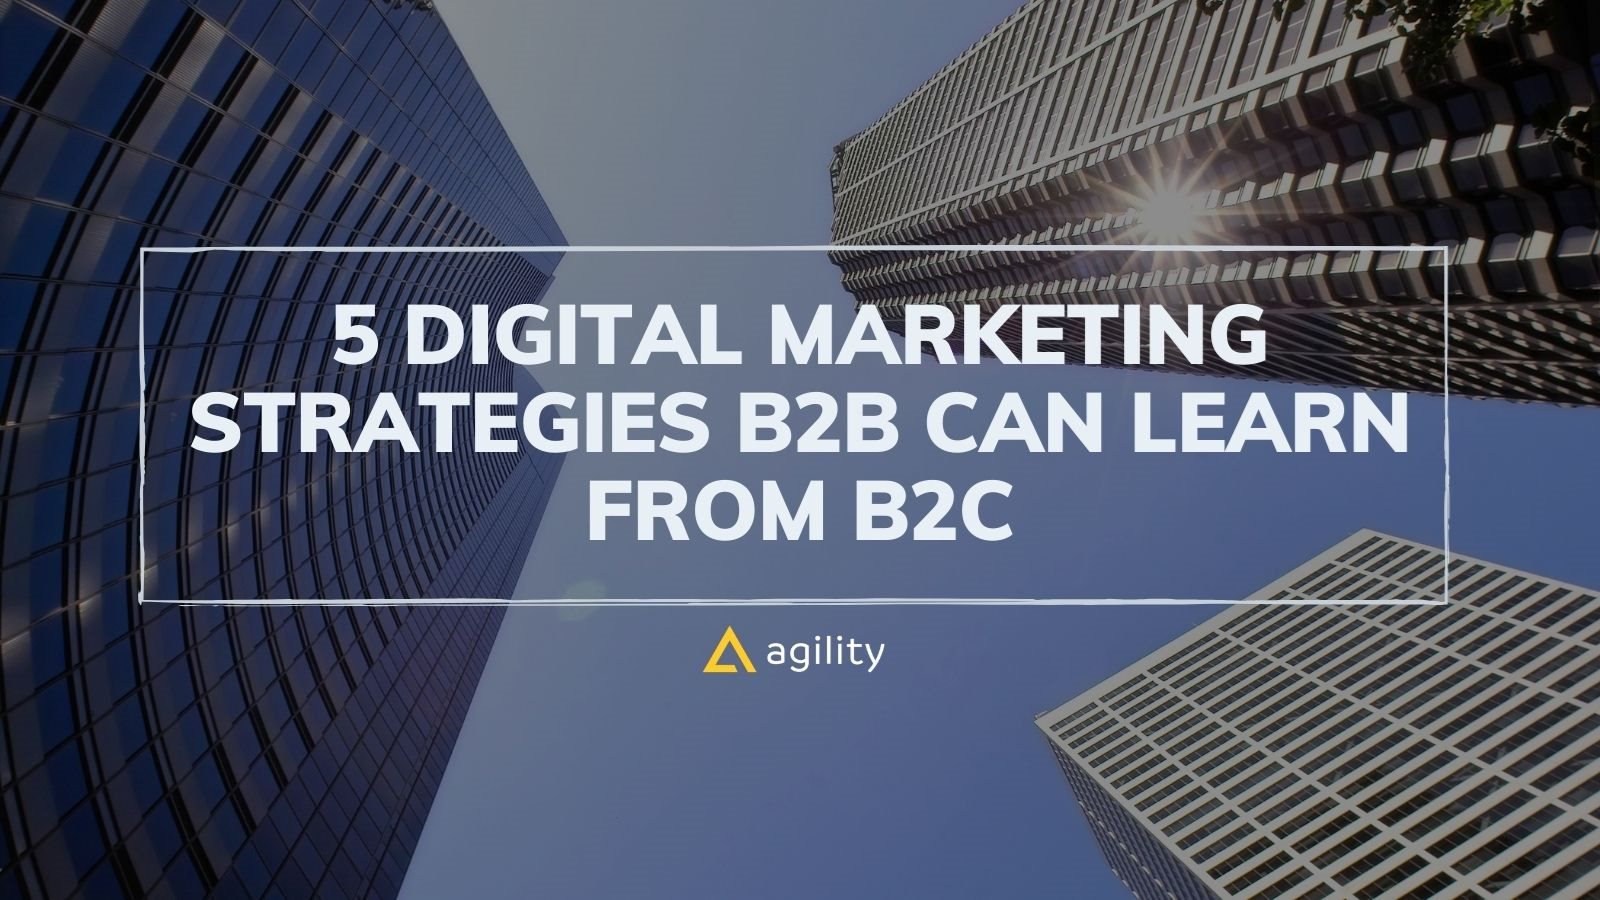 5 Digital Marketing Strategies B2B Can Learn from B2C